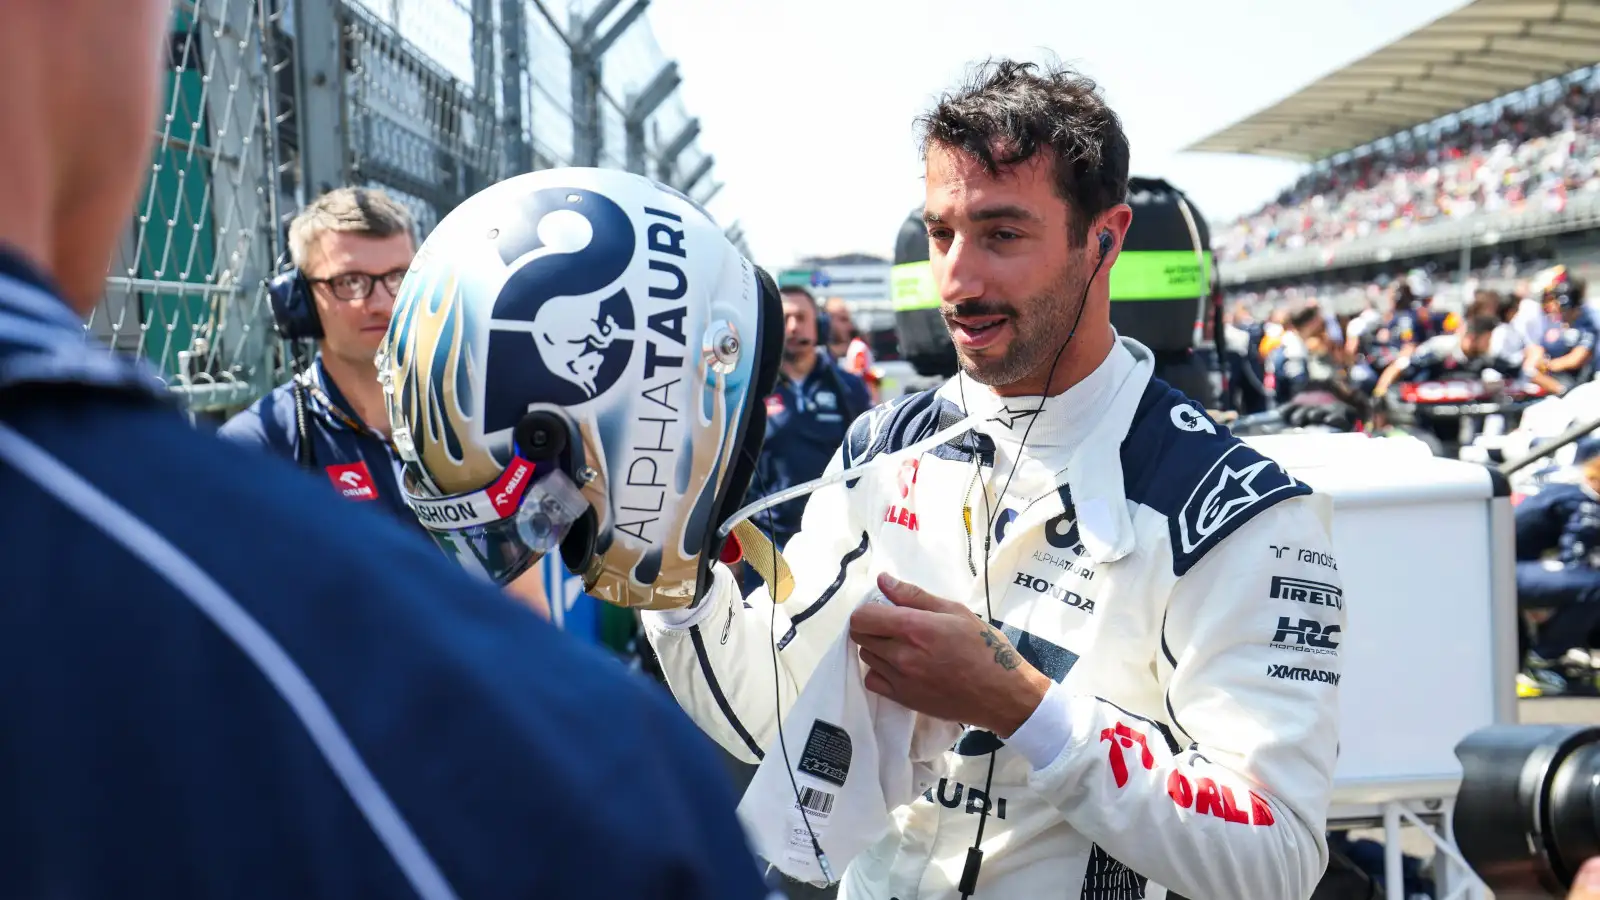 AlphaTauri driver Daniel Ricciardo putting on his helmet on the grid.